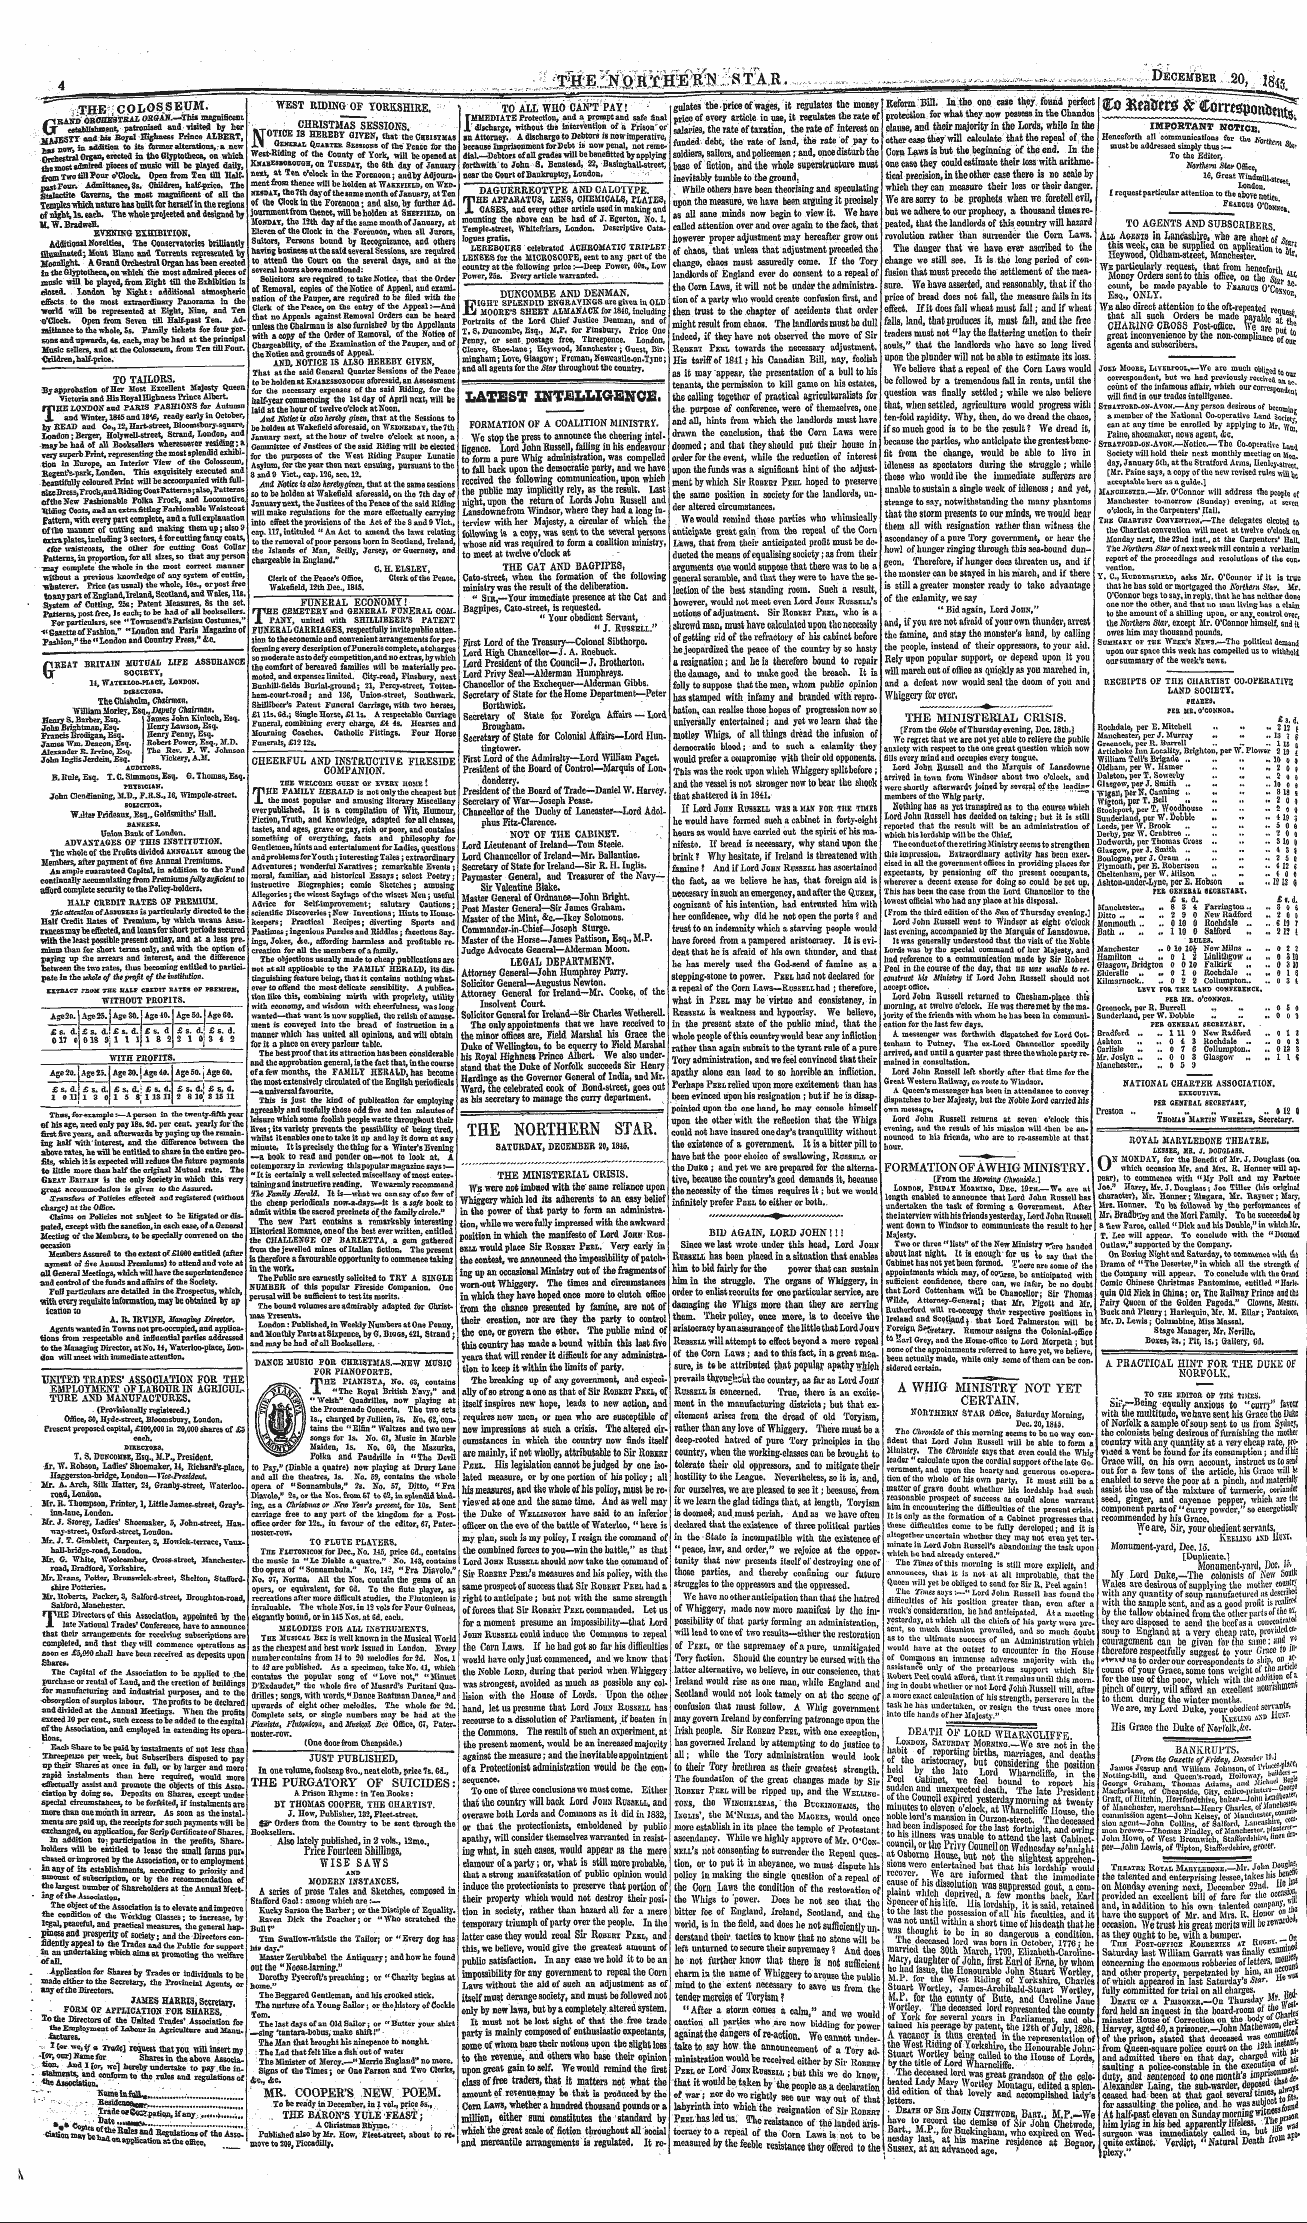 Northern Star (1837-1852): jS F Y, 4th edition - Ad00418